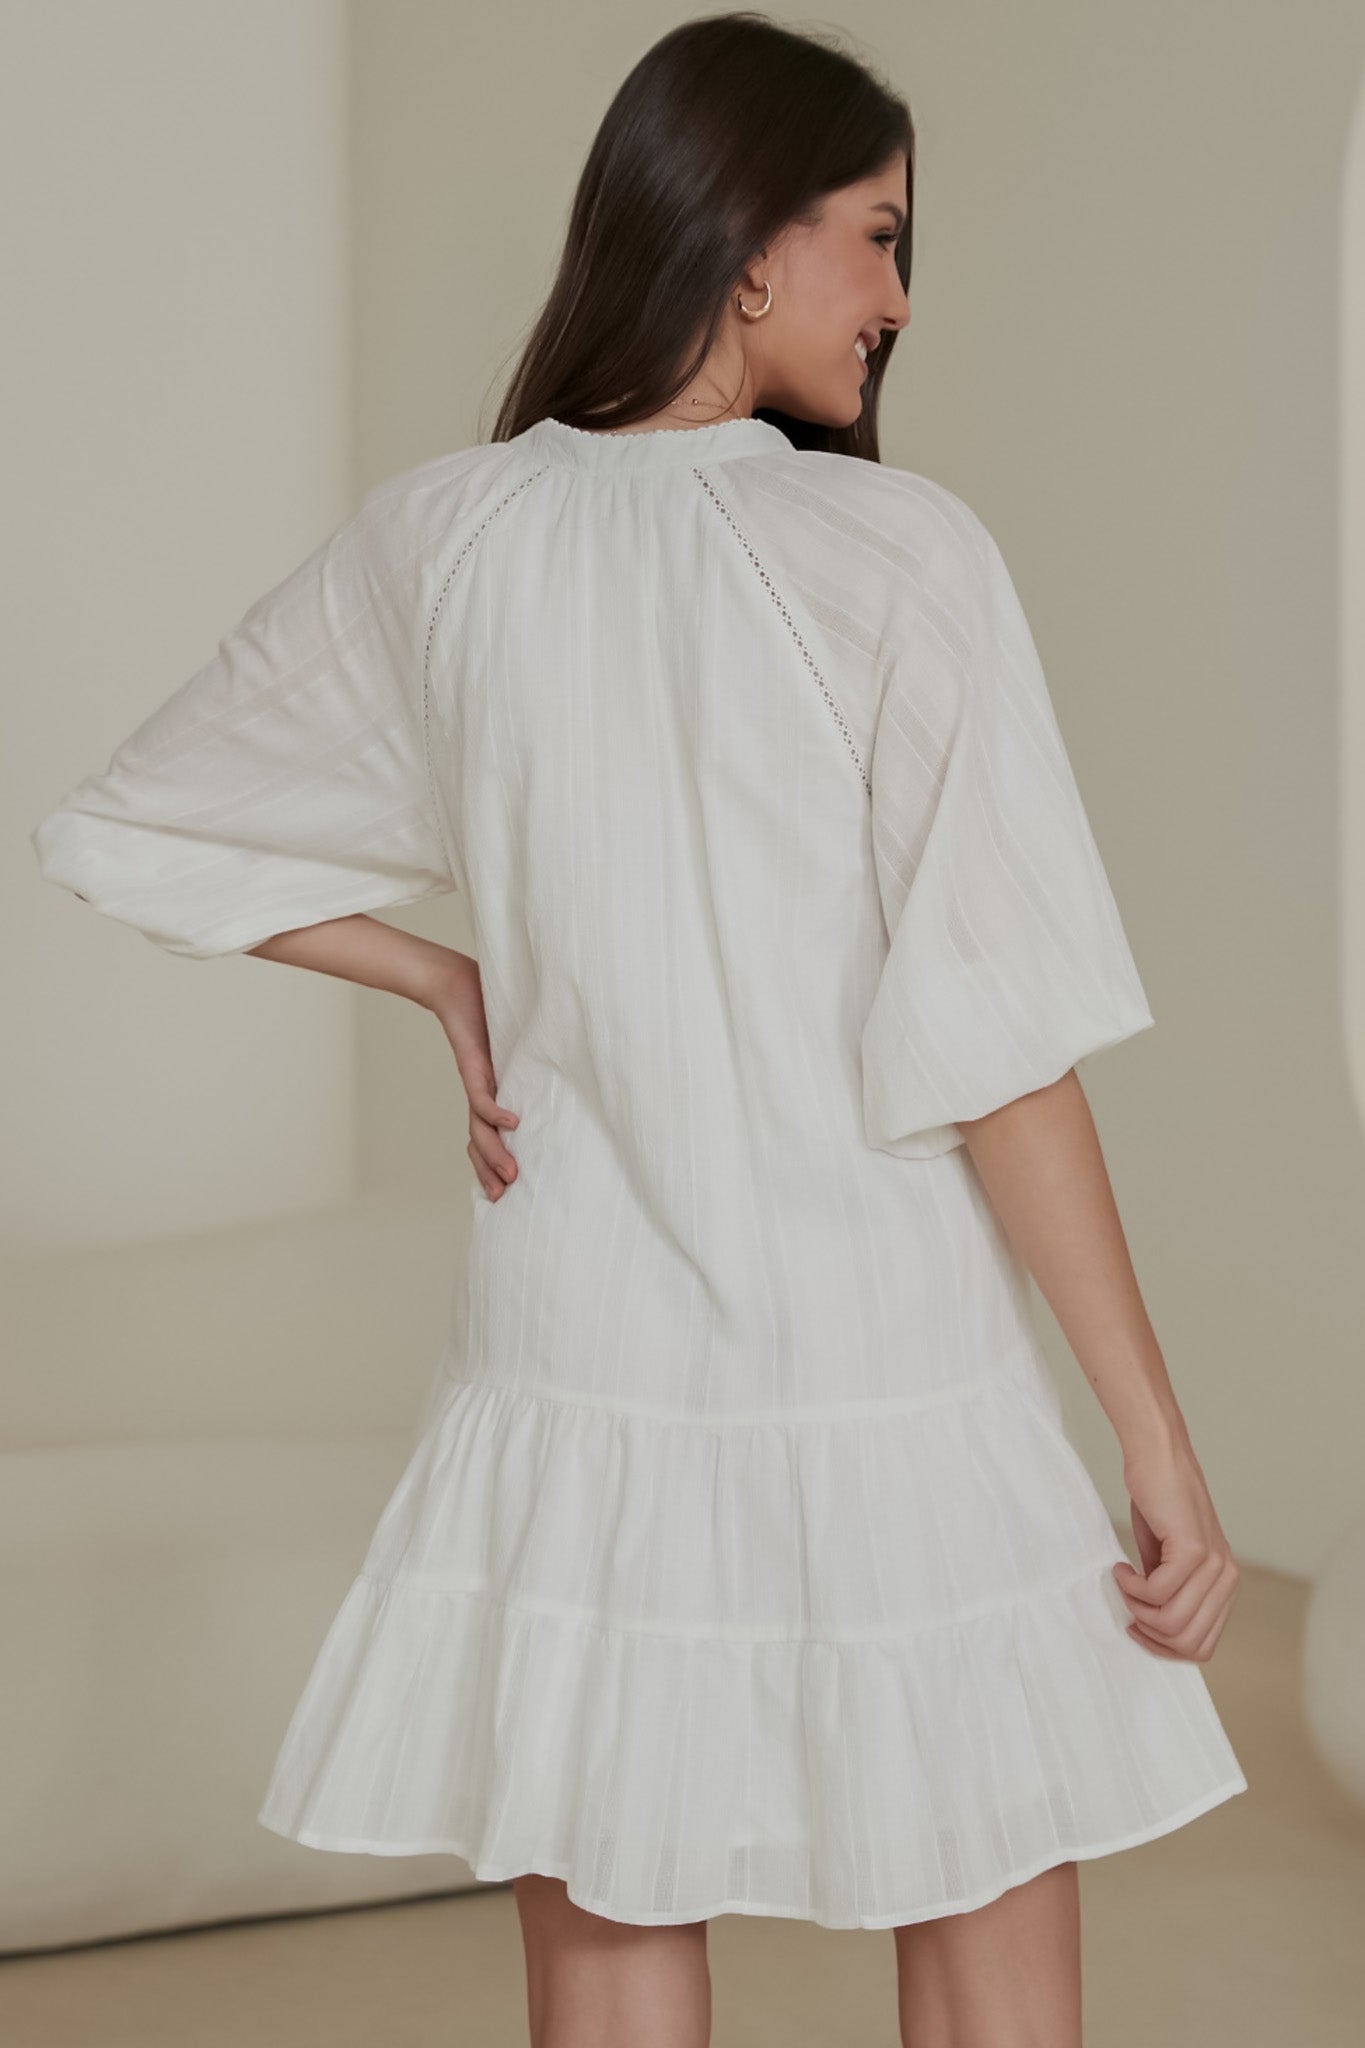 Elsea Mini Dress - Mandarin Collar Button Down Dress with Matching Waist Tie in White